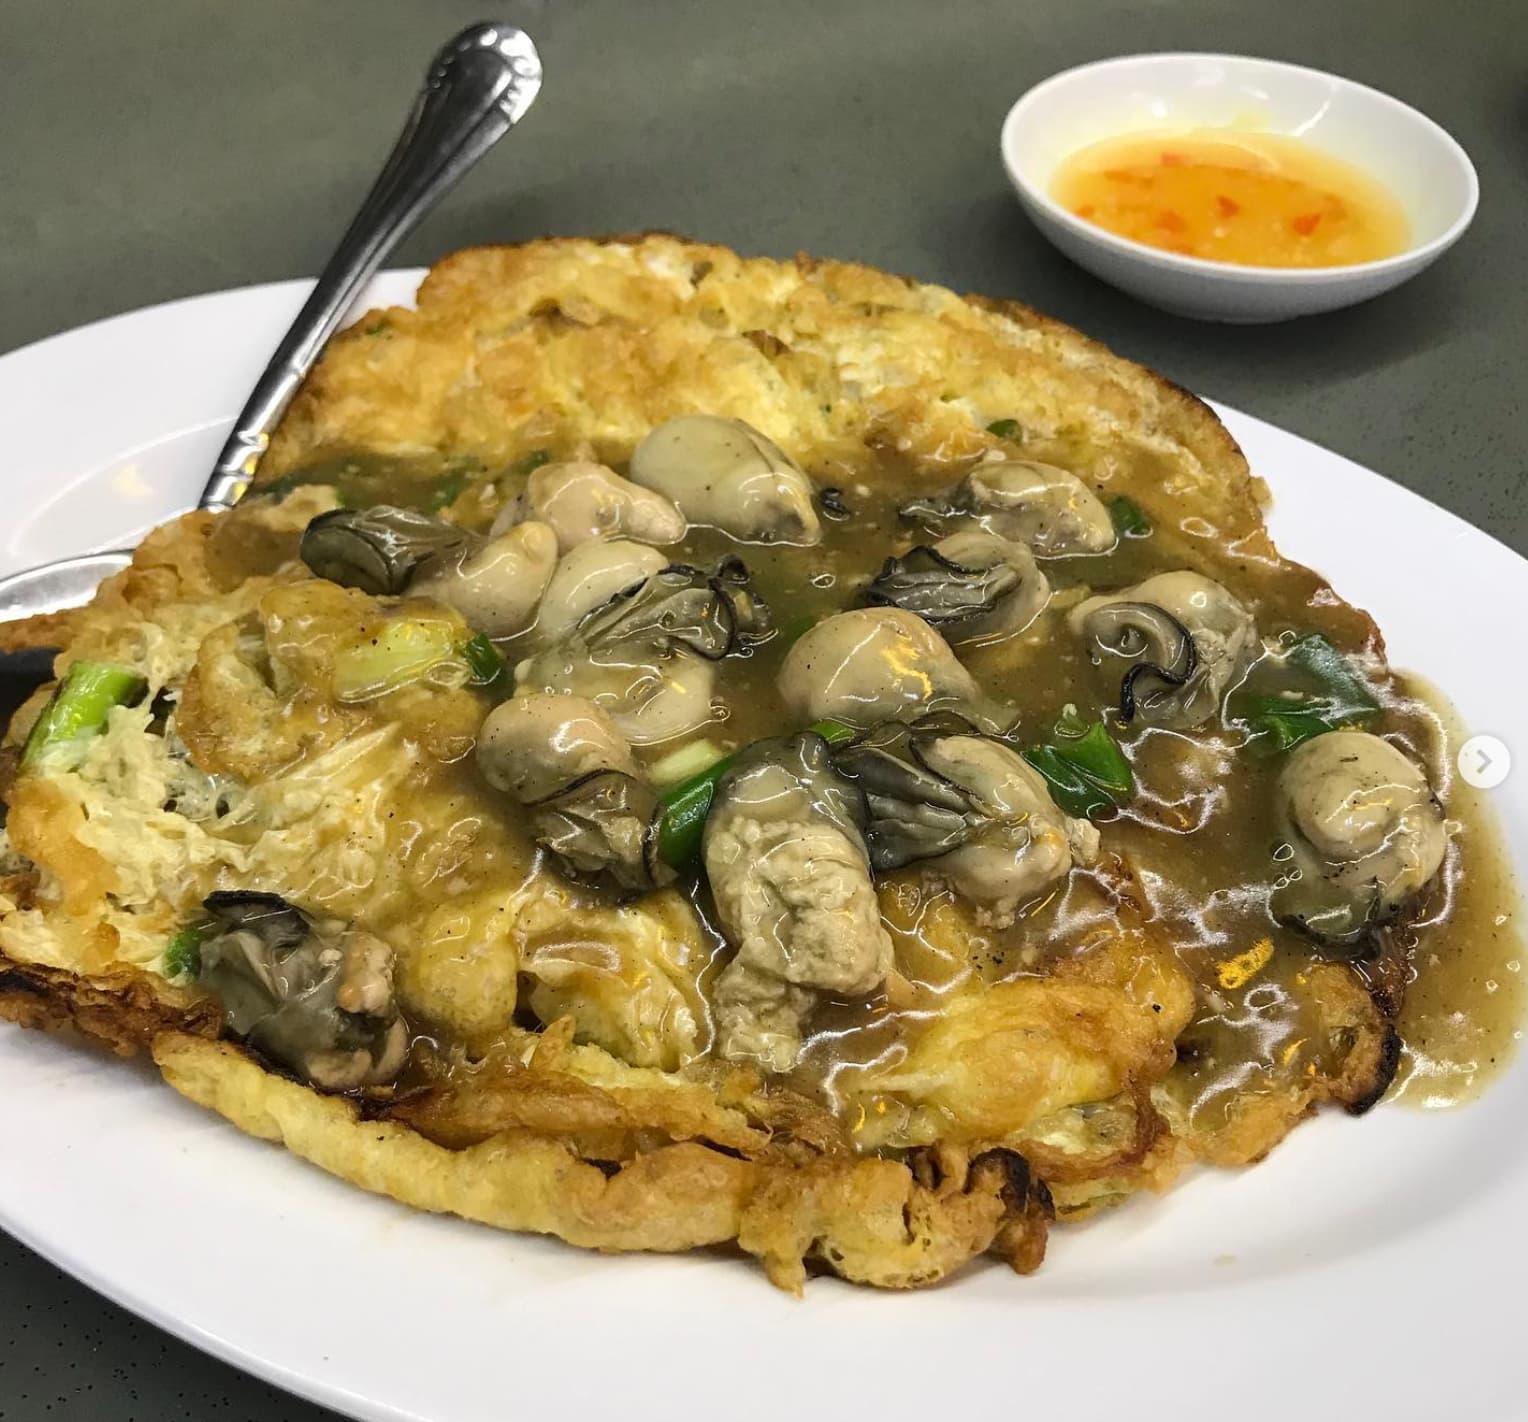 ah orh teochew restaurant - best oyster omelette in singapore